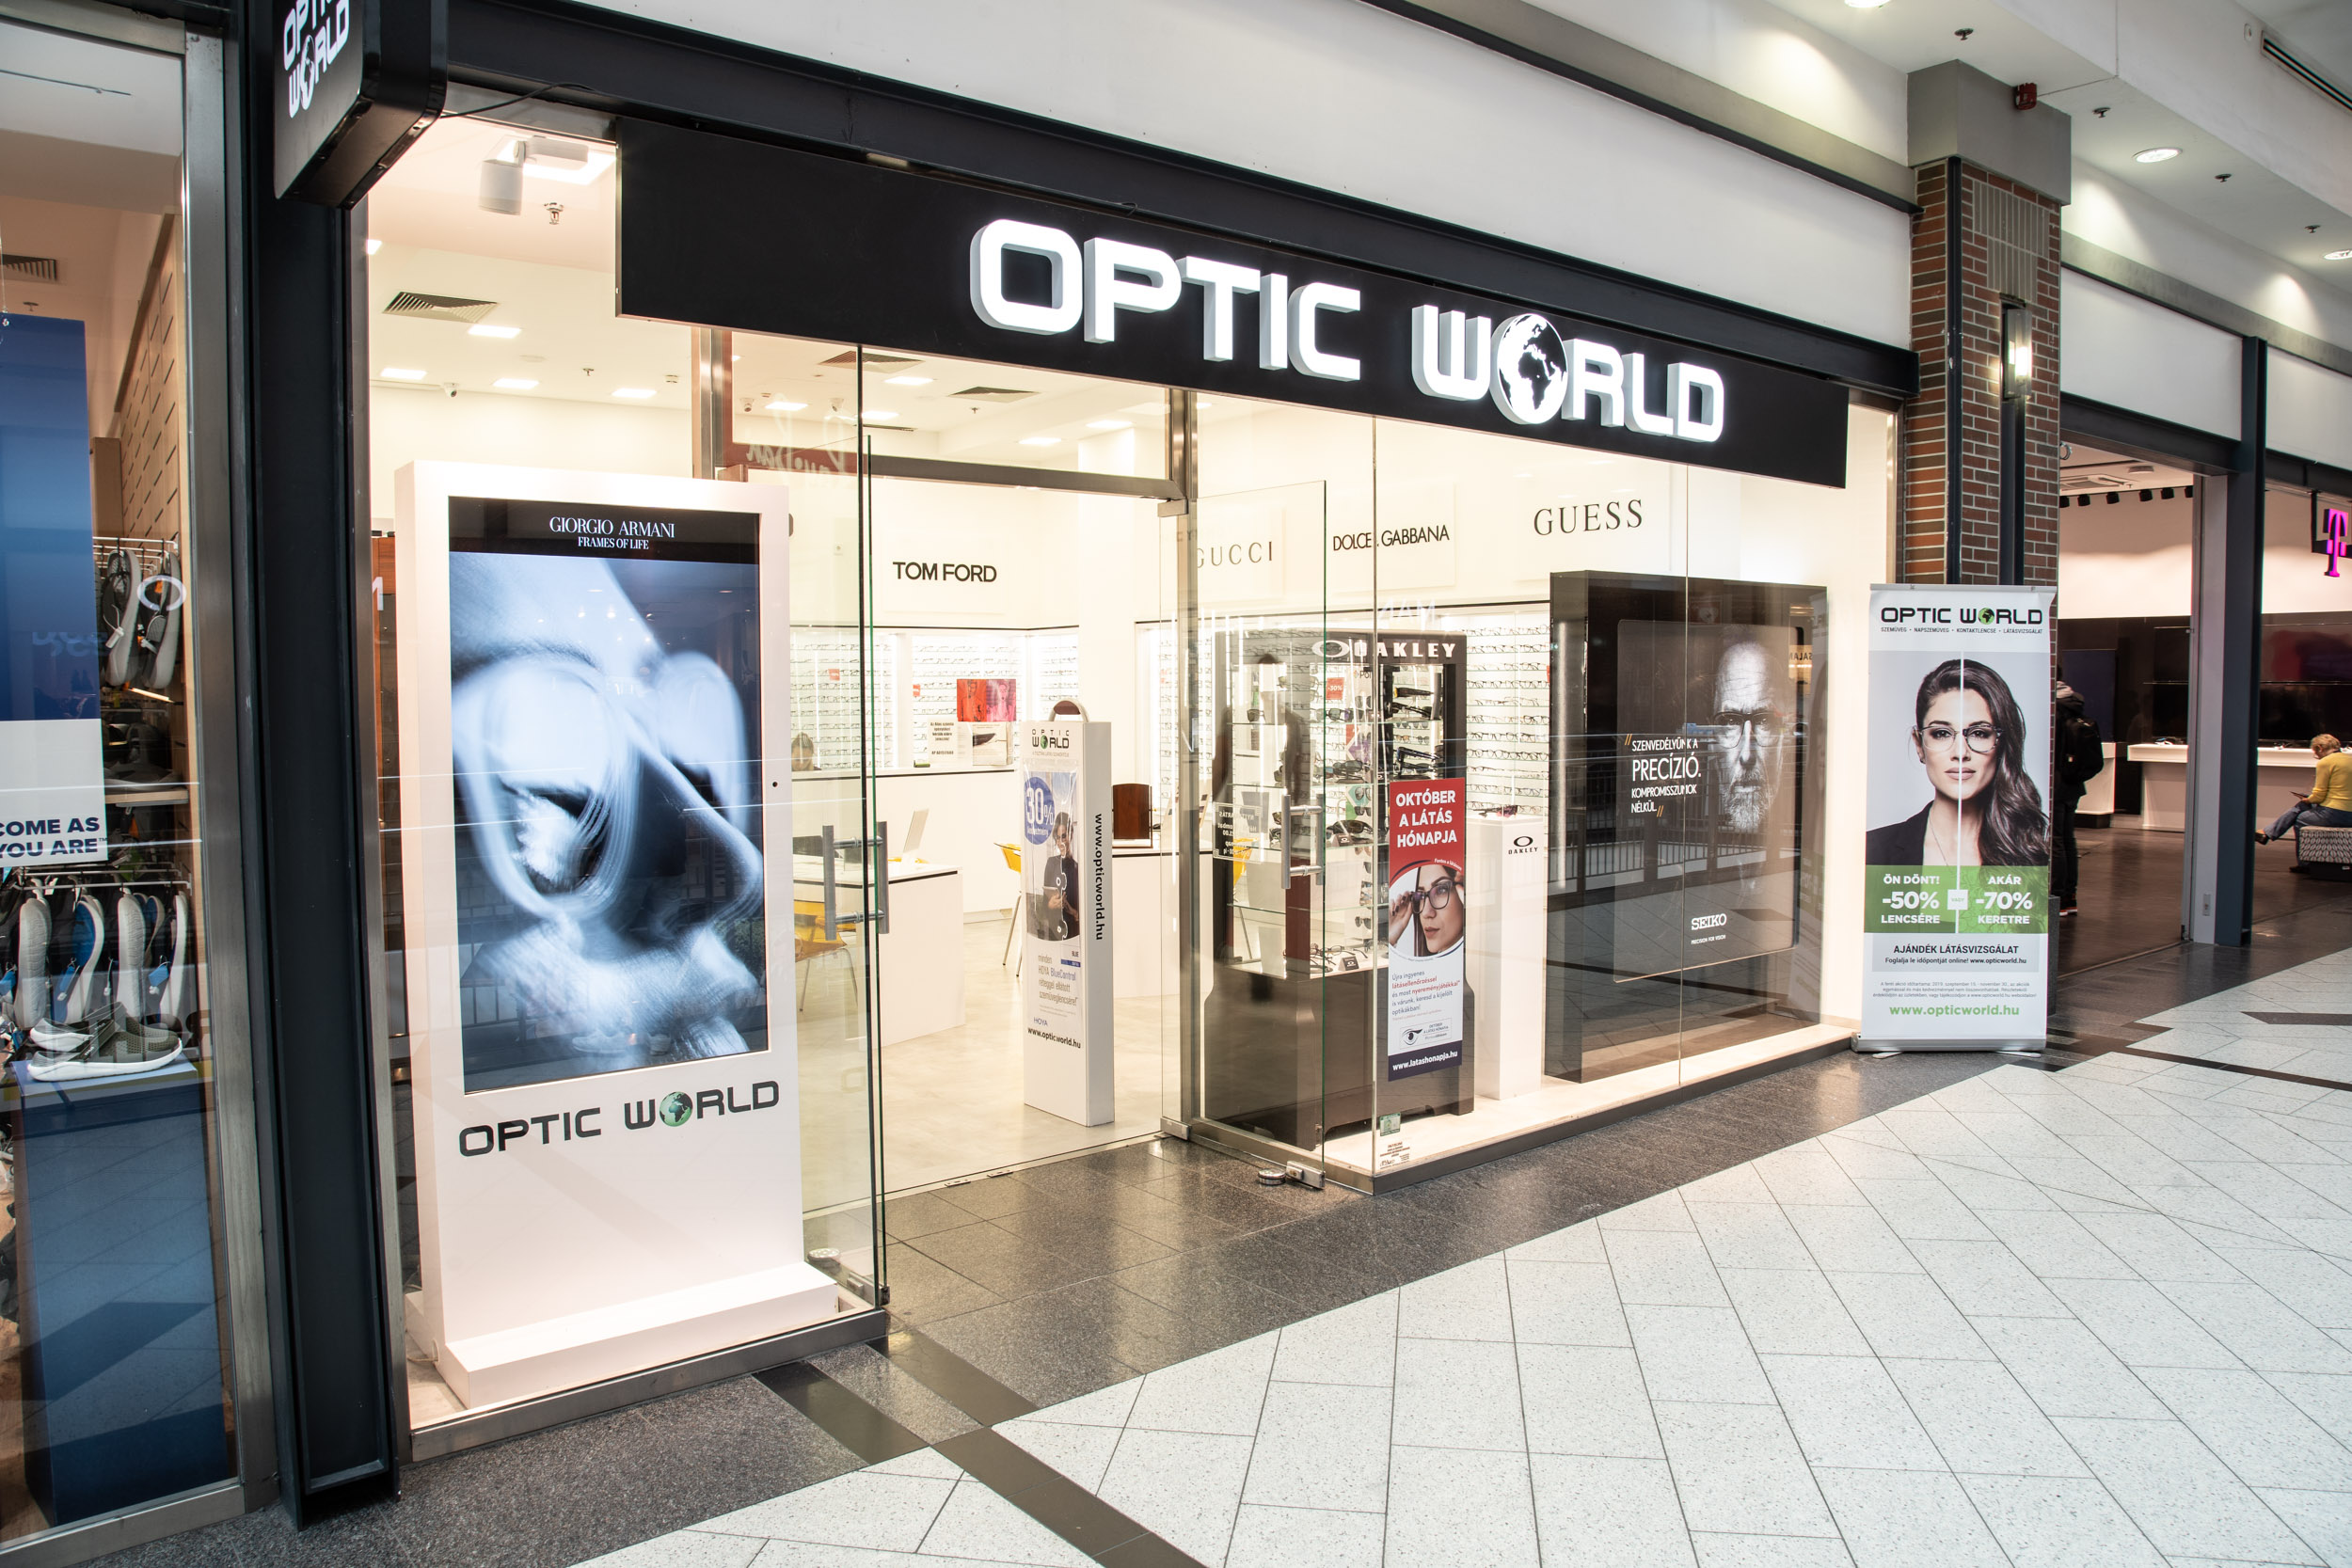 Optic world